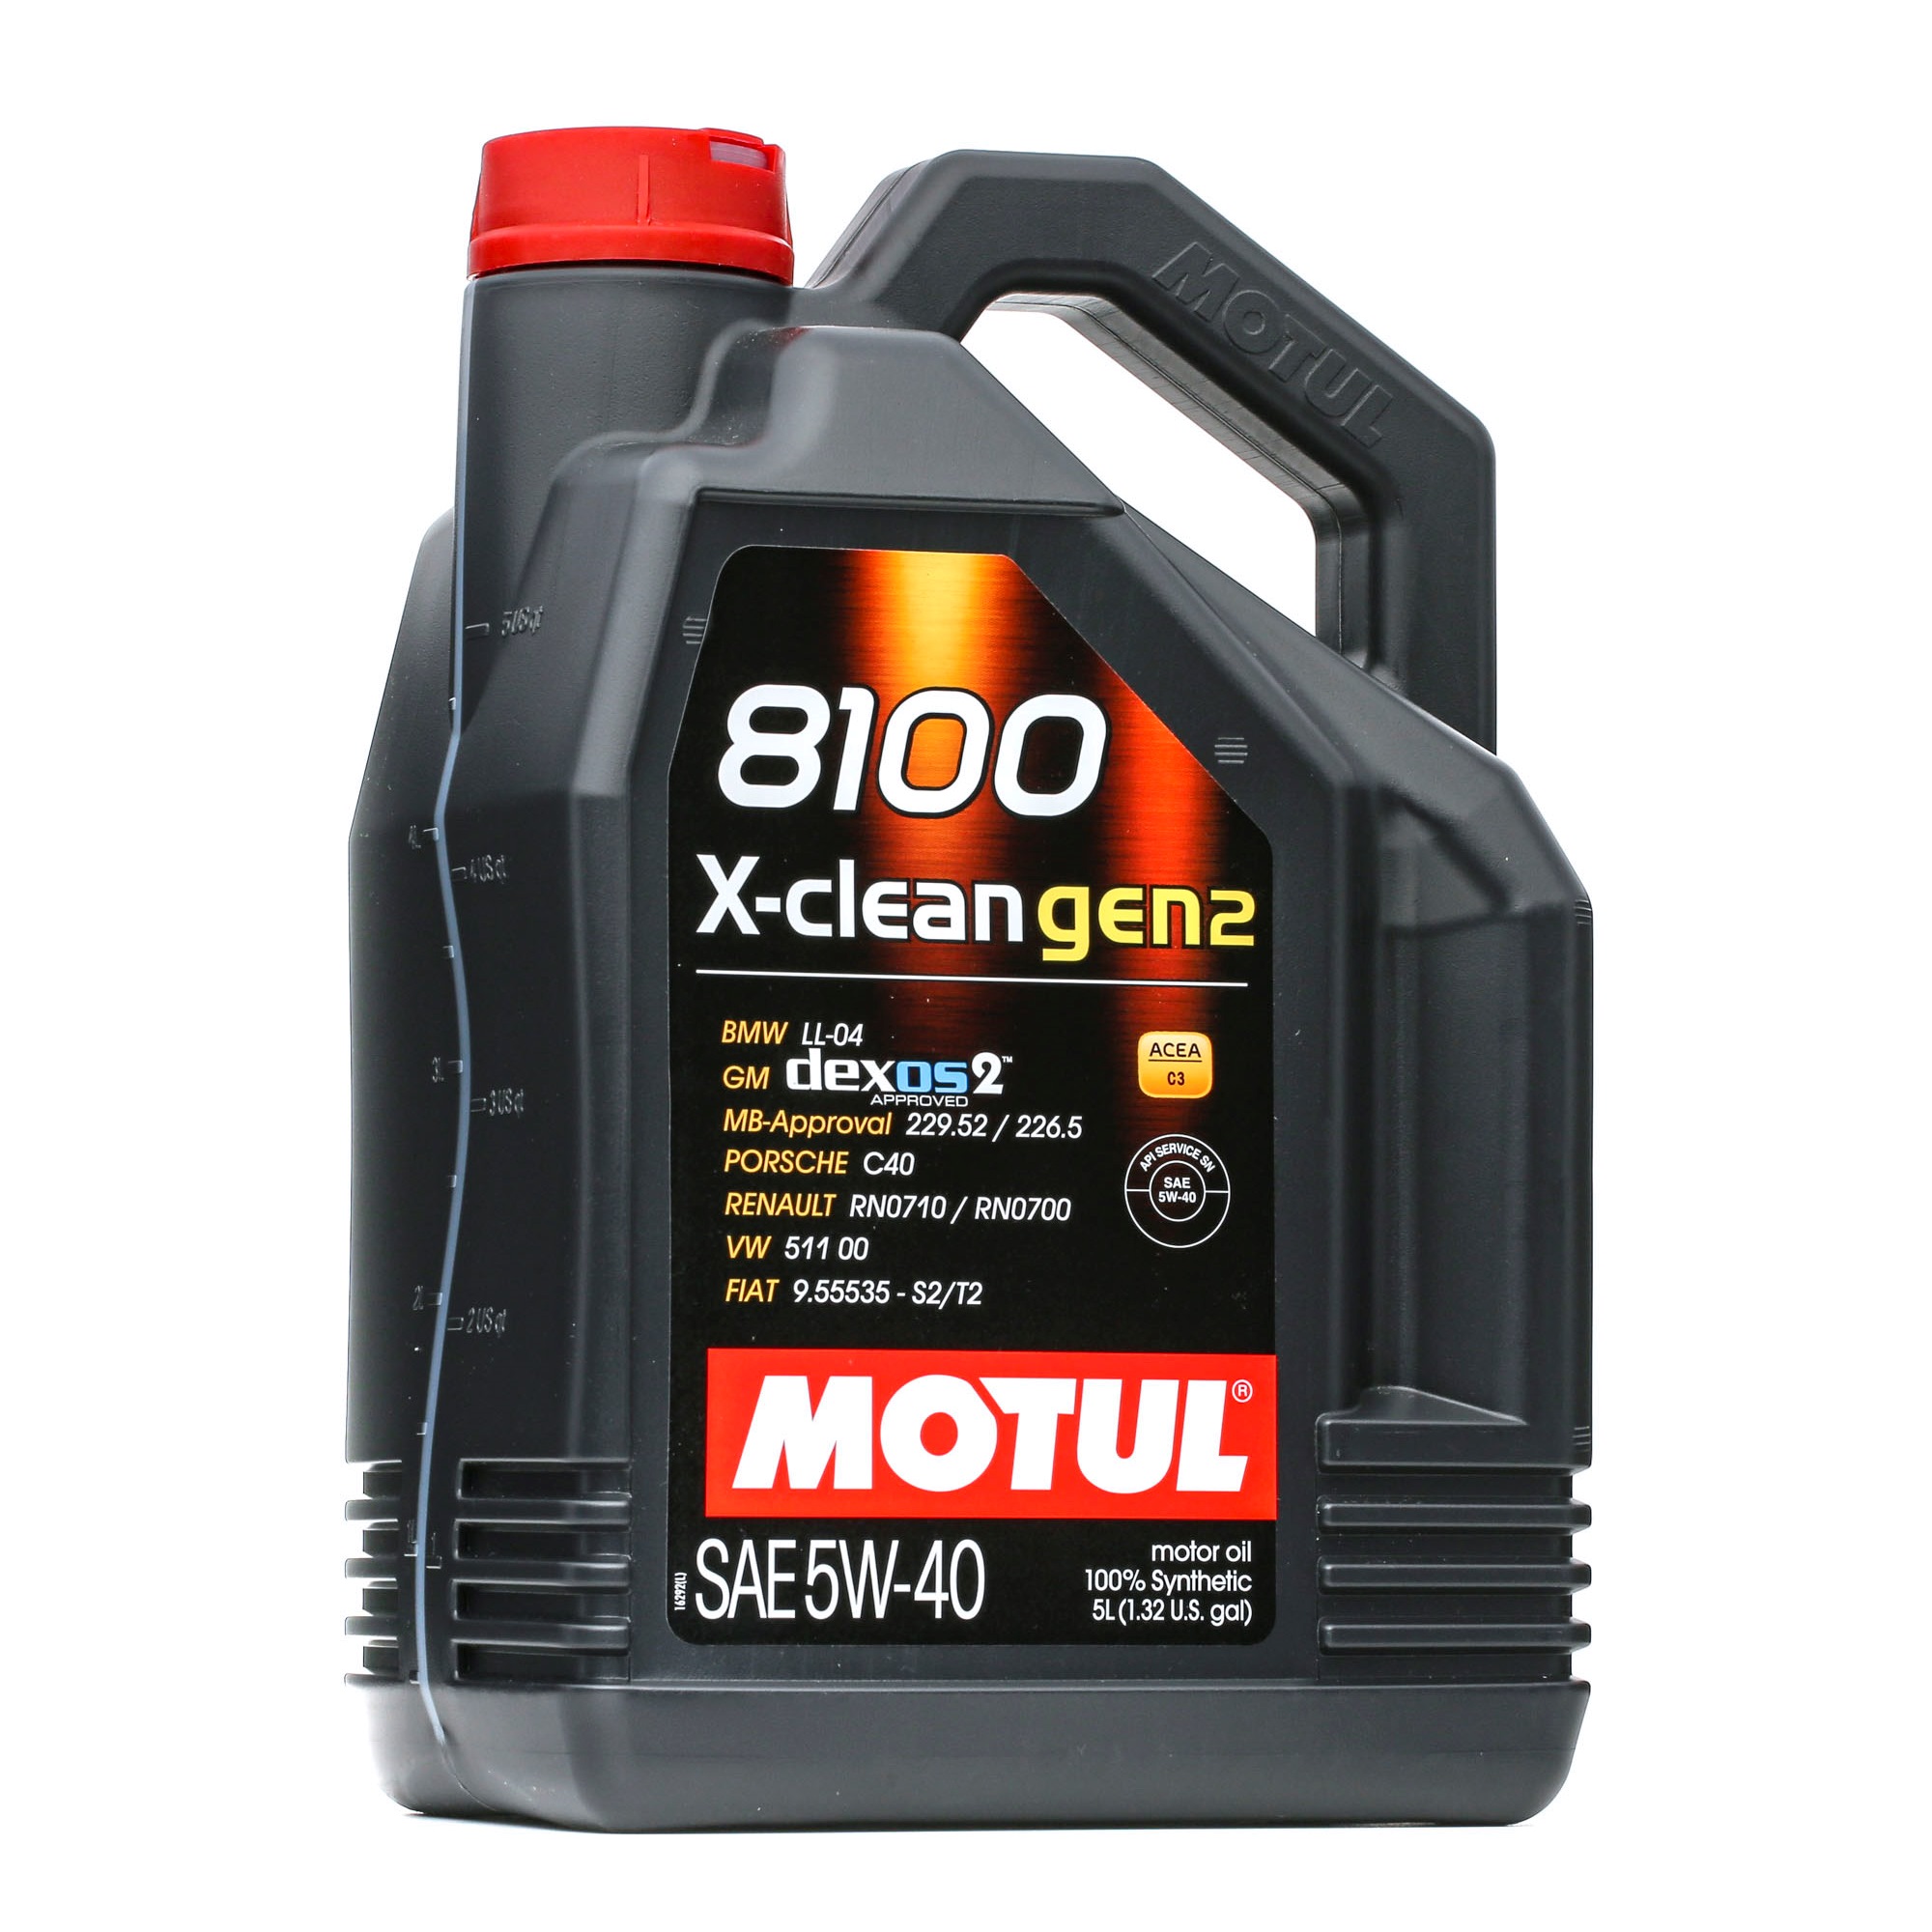 Kaufen Motorenöl MOTUL 109762 X-CLEAN GEN2 5W-40, 5l